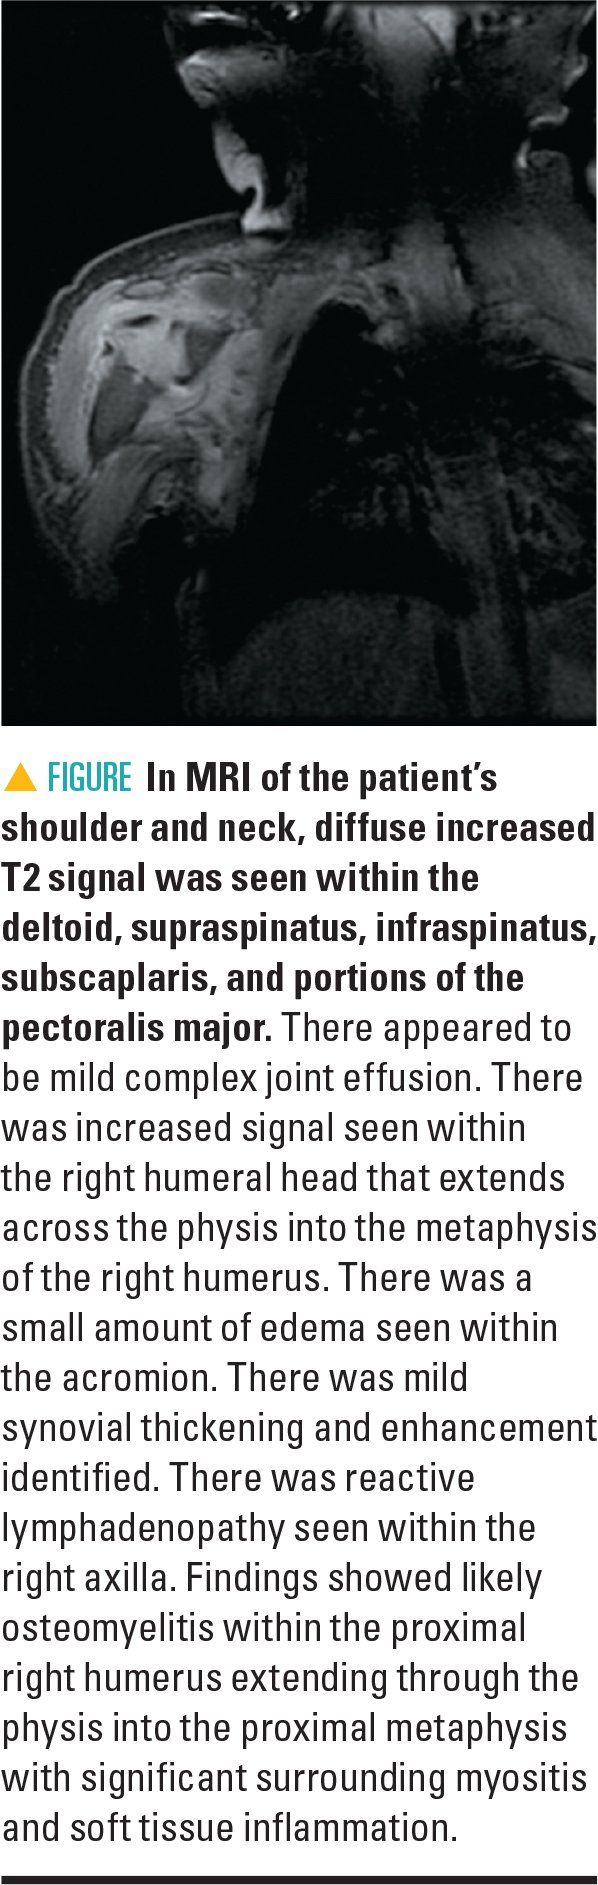 MRI of patient's shoulder and neck